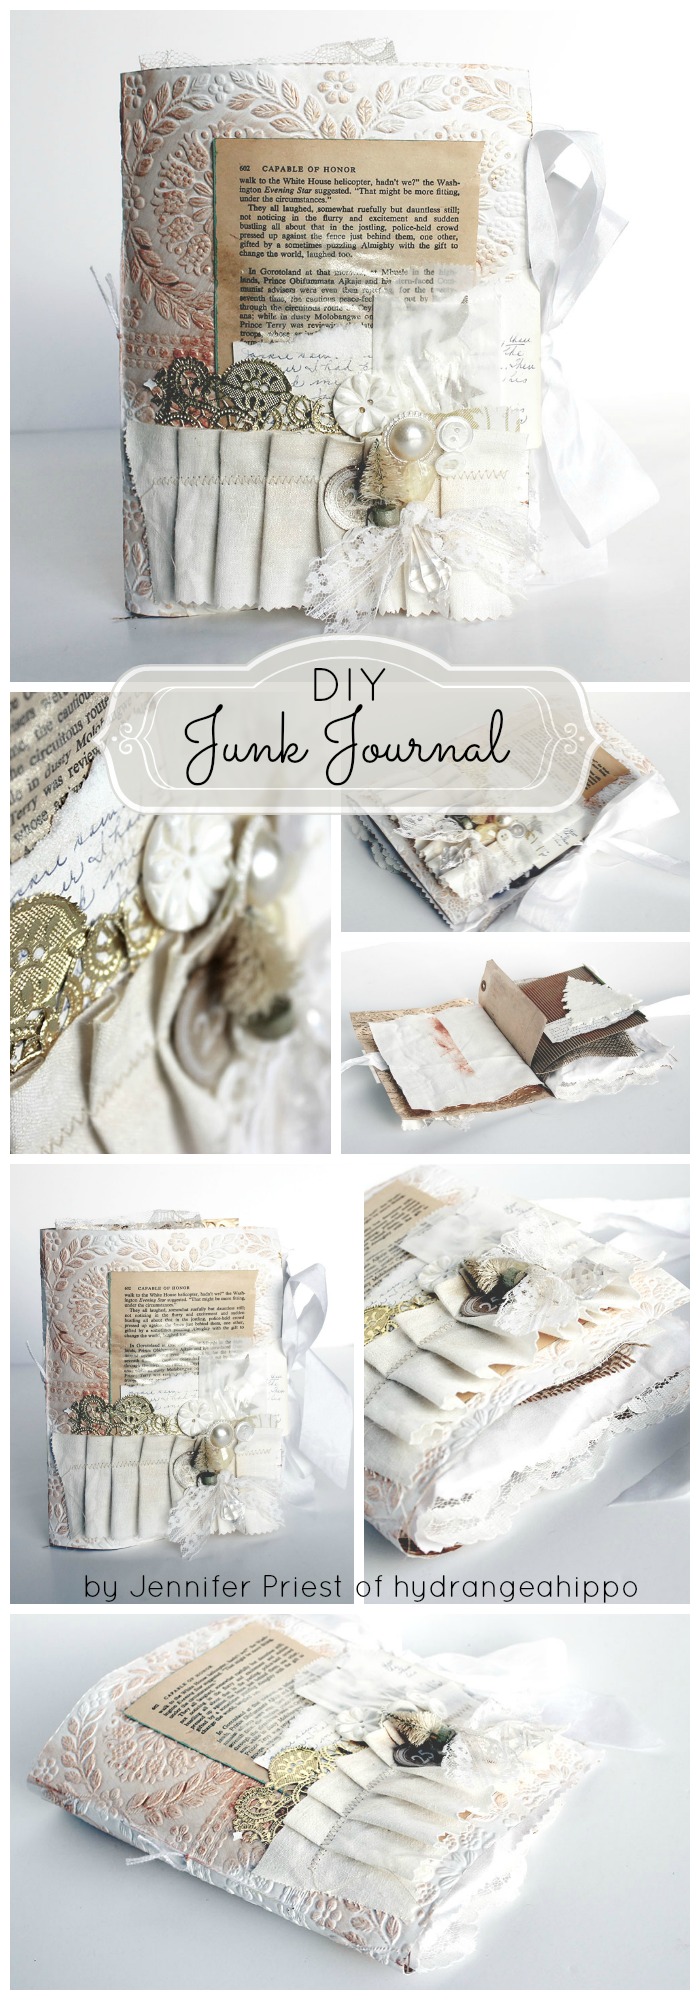 Junk Journal by Jennifer Priest COLLAGE